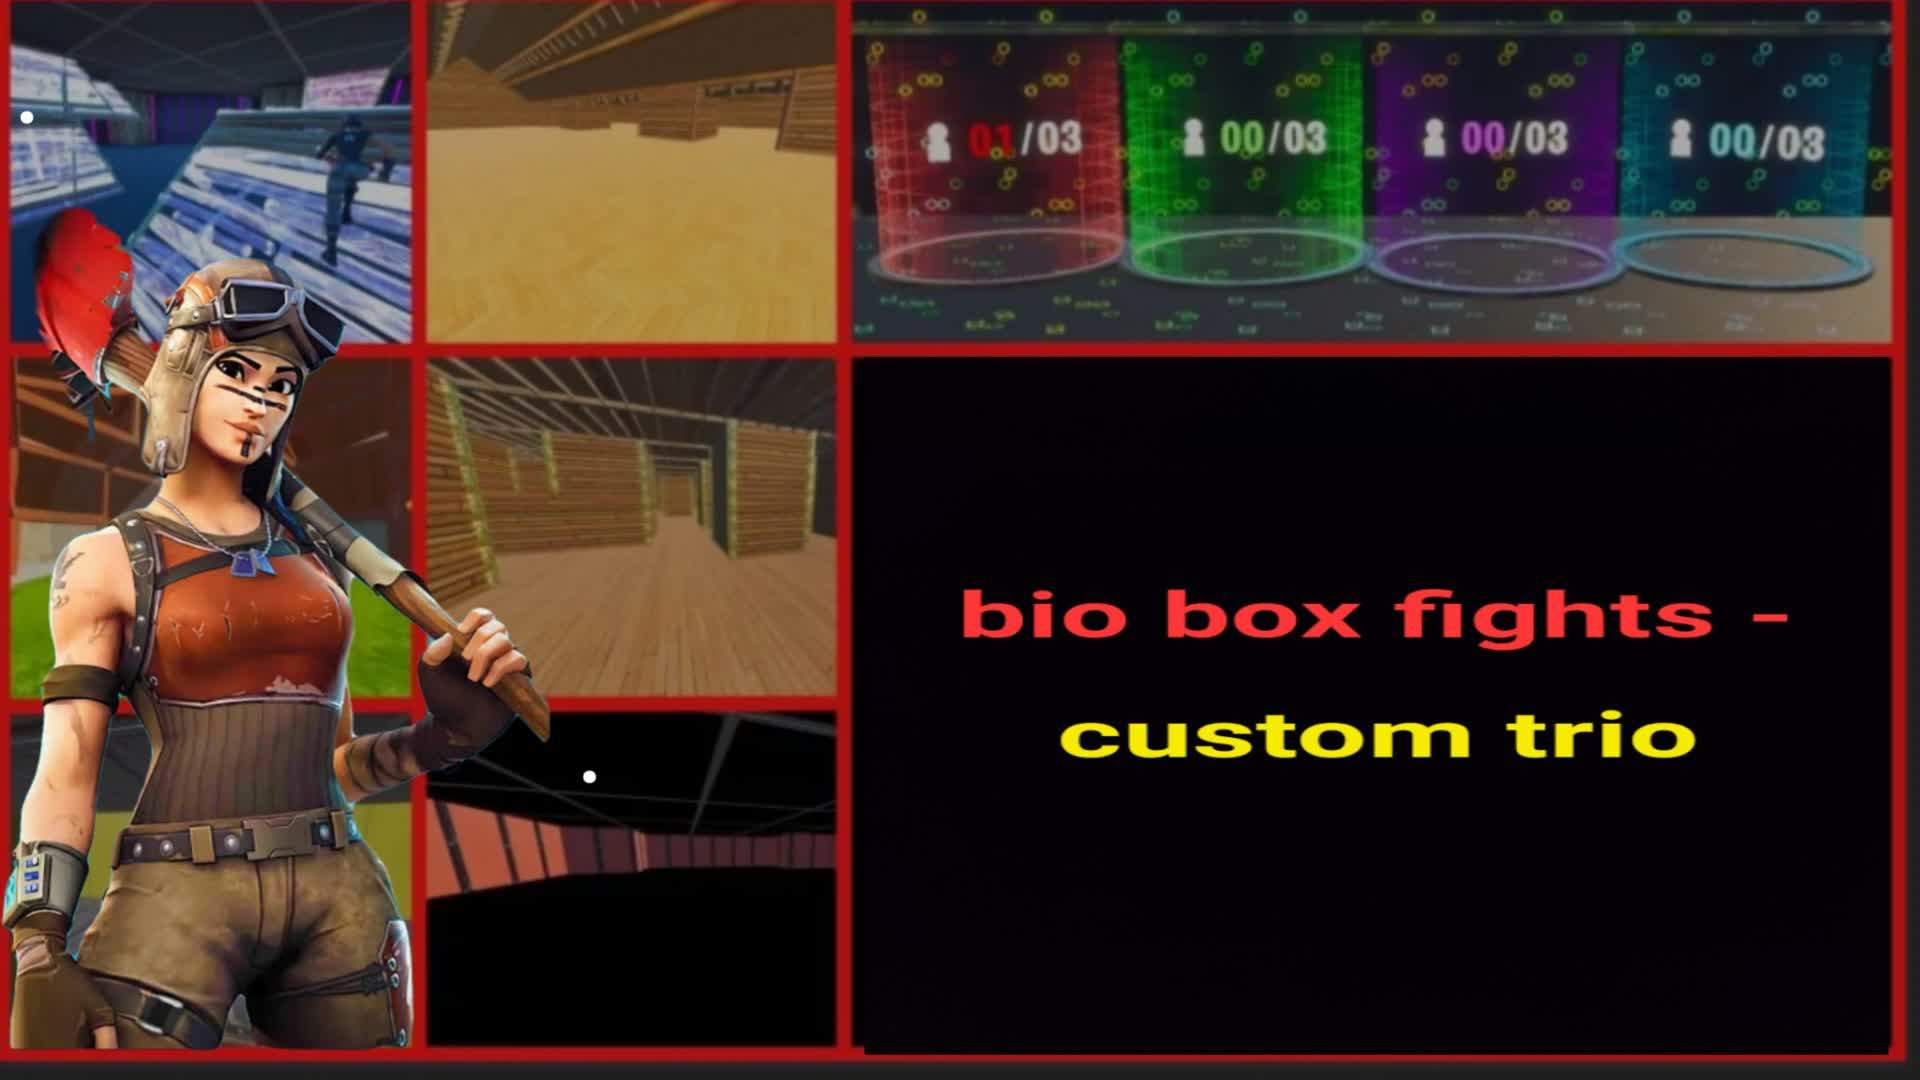 Bio box fights - custom trio